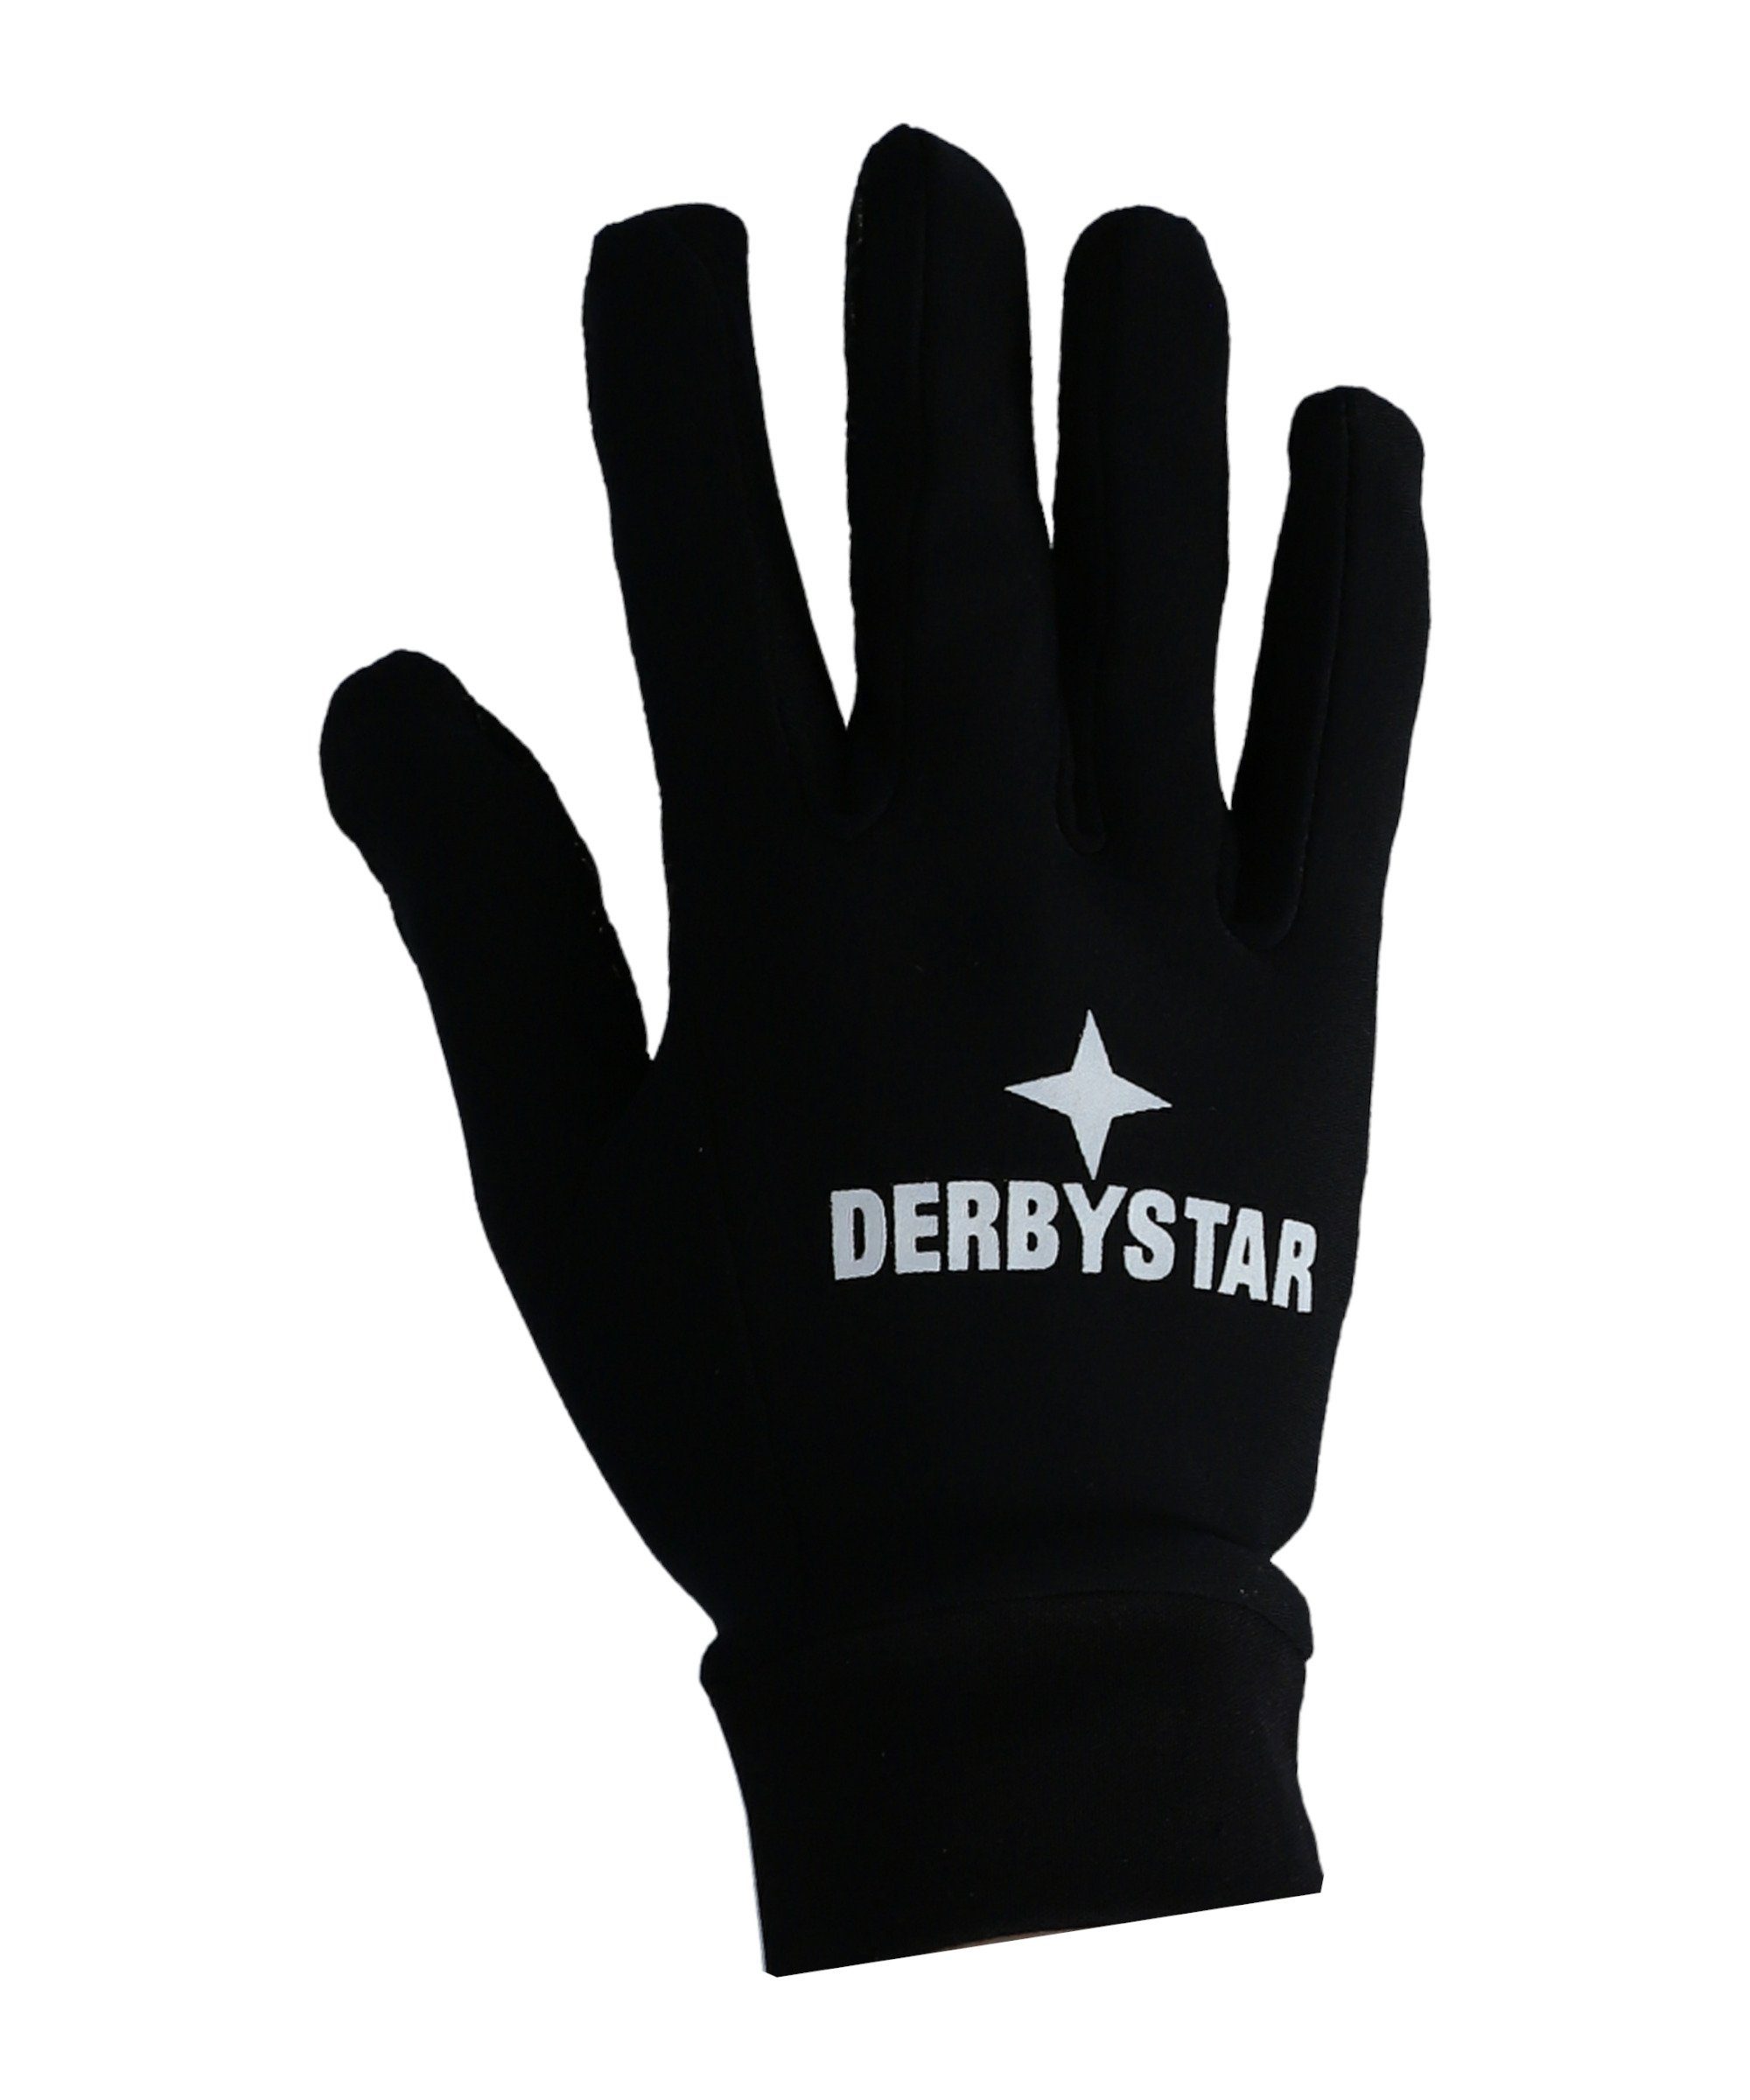 Derbystar Feldspielerhandschuhe Spielerhandschuhe v20